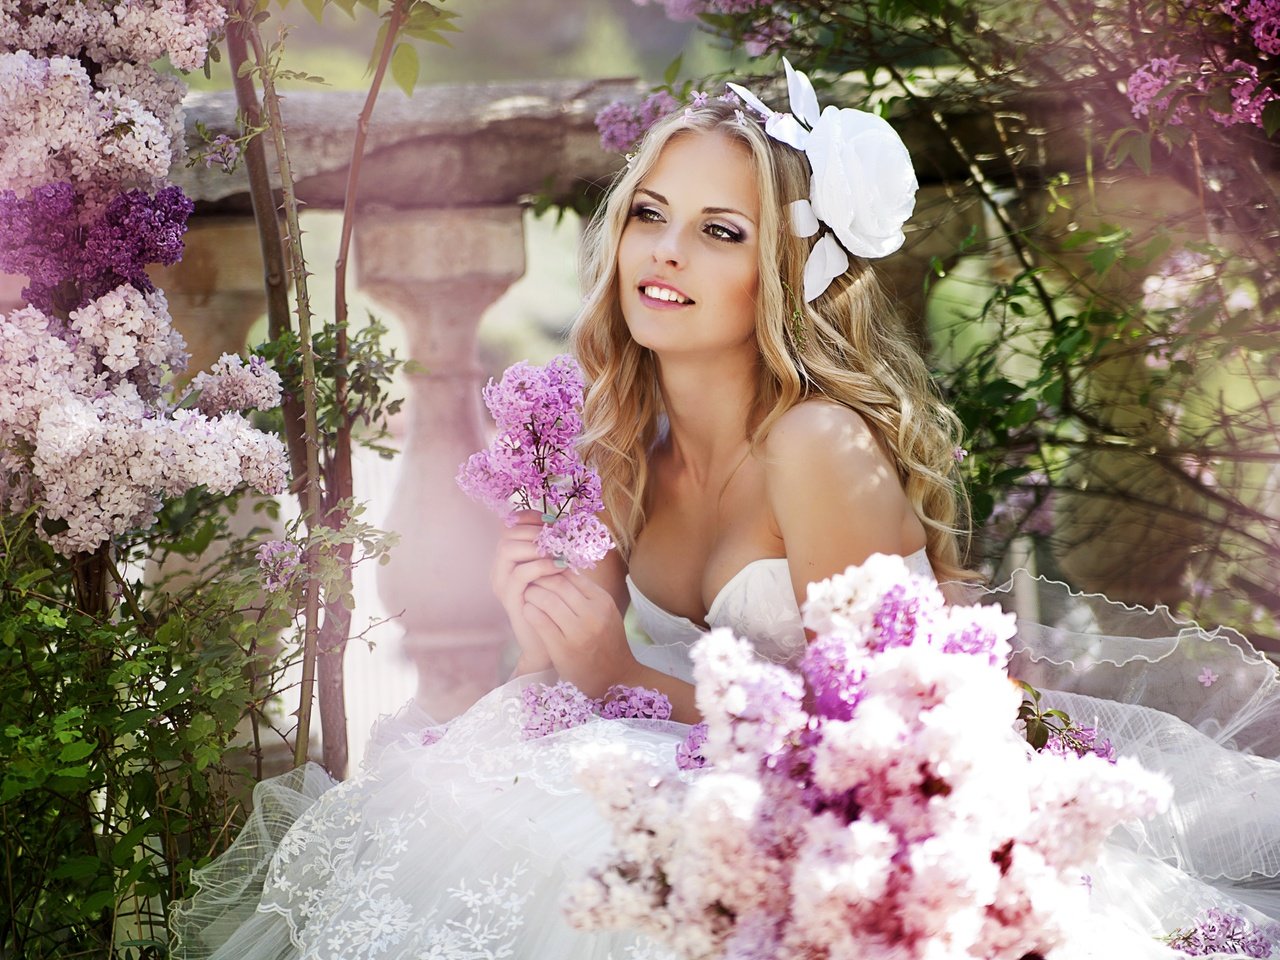 https://wallbox.ru/resize/1280x960/wallpapers/main2/201647/bouguet-of-flowers-veils-bride-wedding-joy-girl-smile.jpg